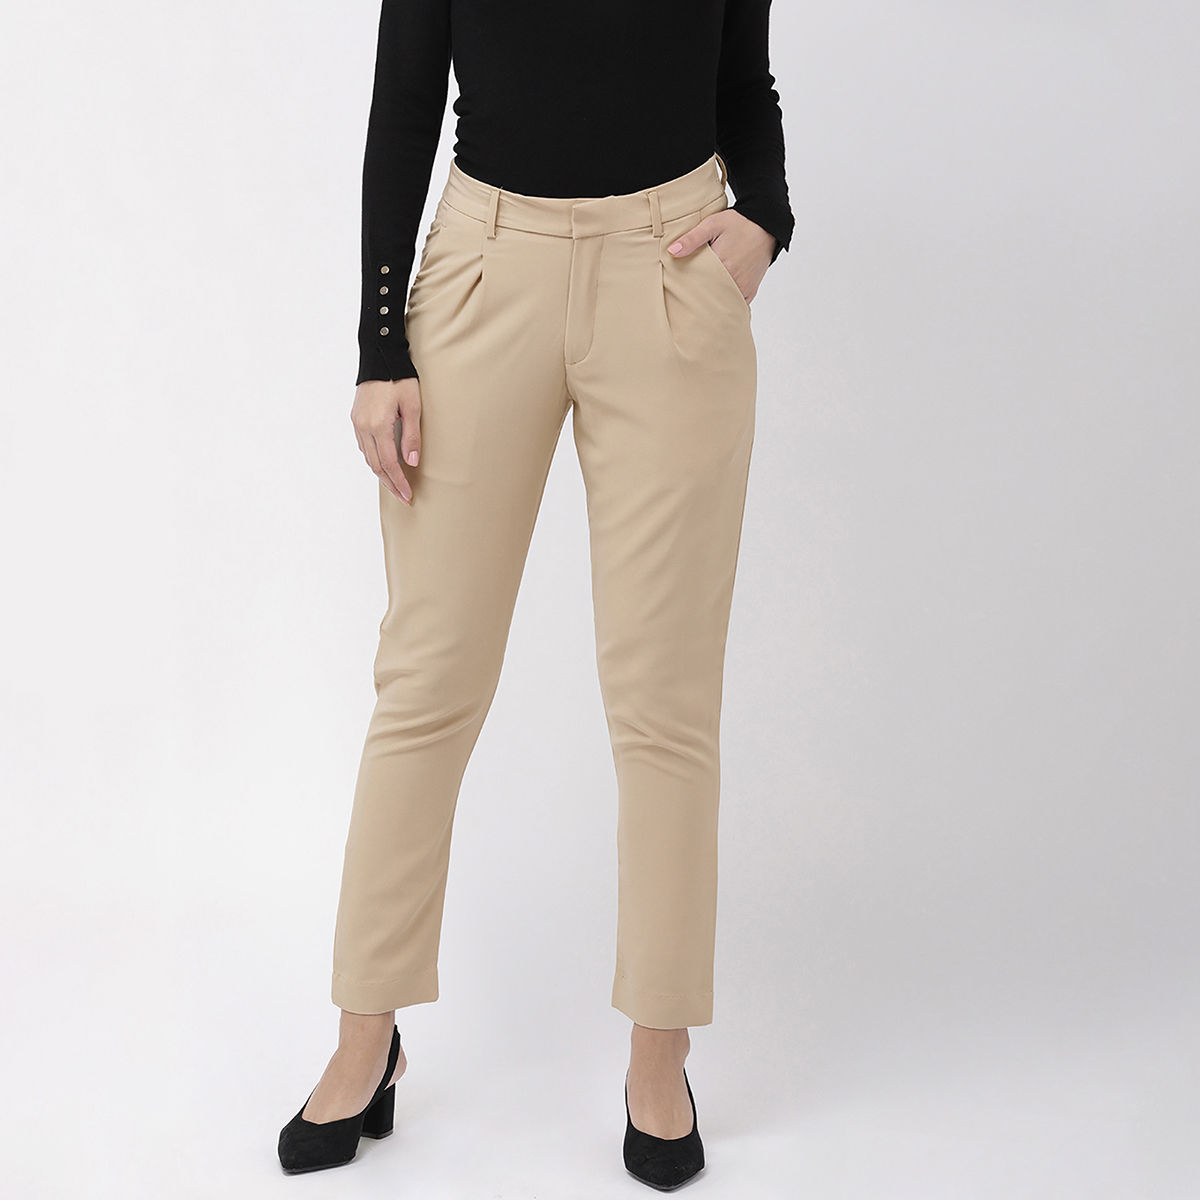 Buy Men Cream Solid Slim Fit Formal Trousers Online  715804  Peter England